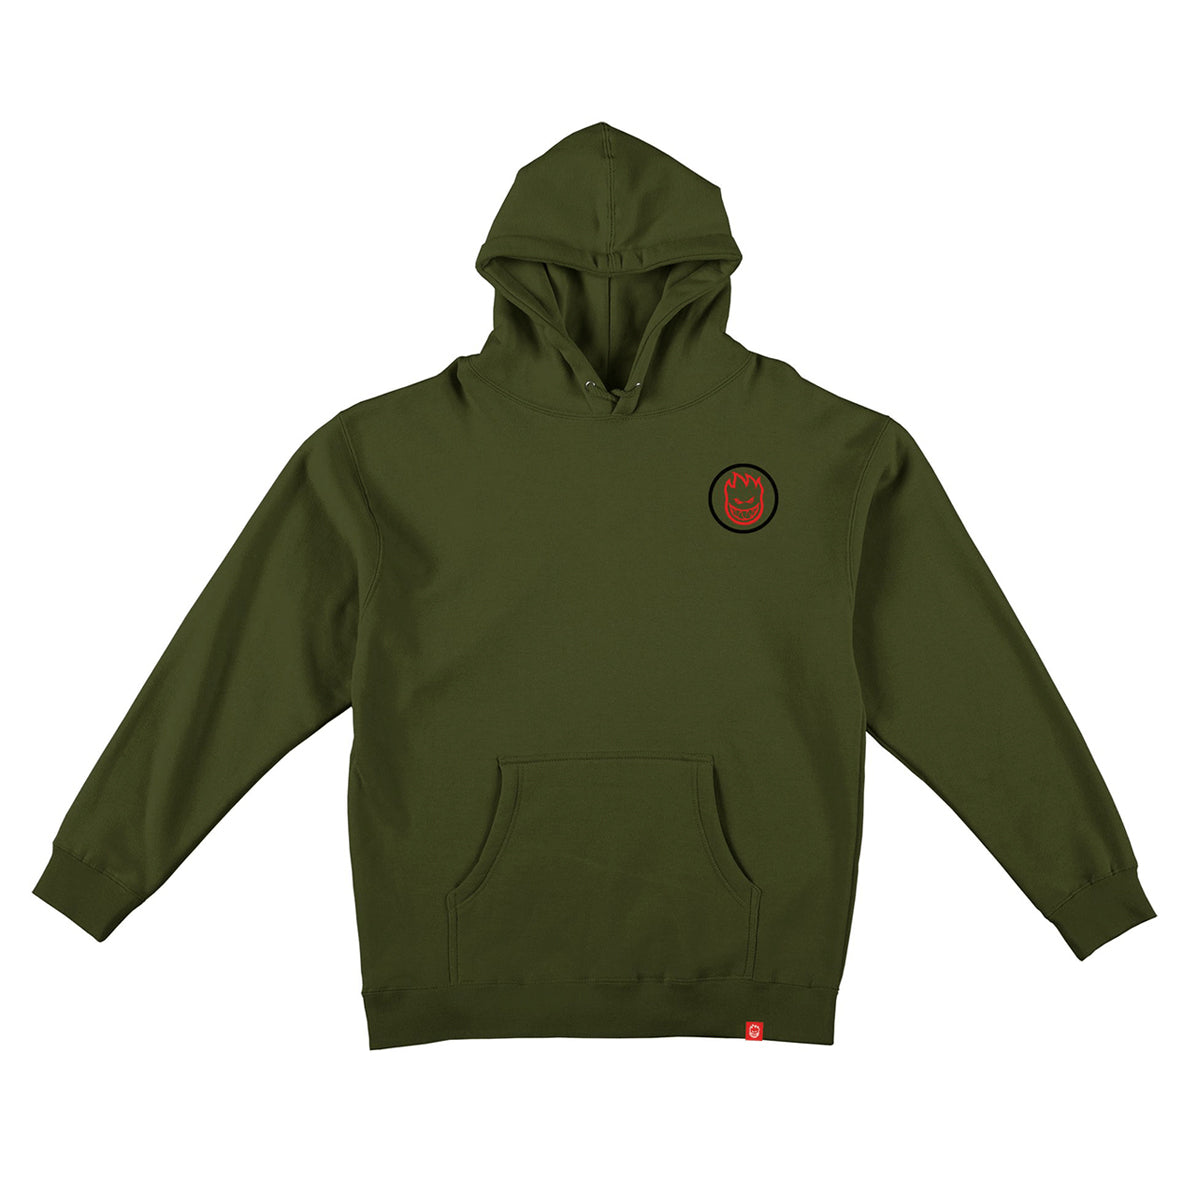 Spitfire Classic Swirl Overlay Hooded Sweatshirt (Army Green) - Apple Valley Emporium